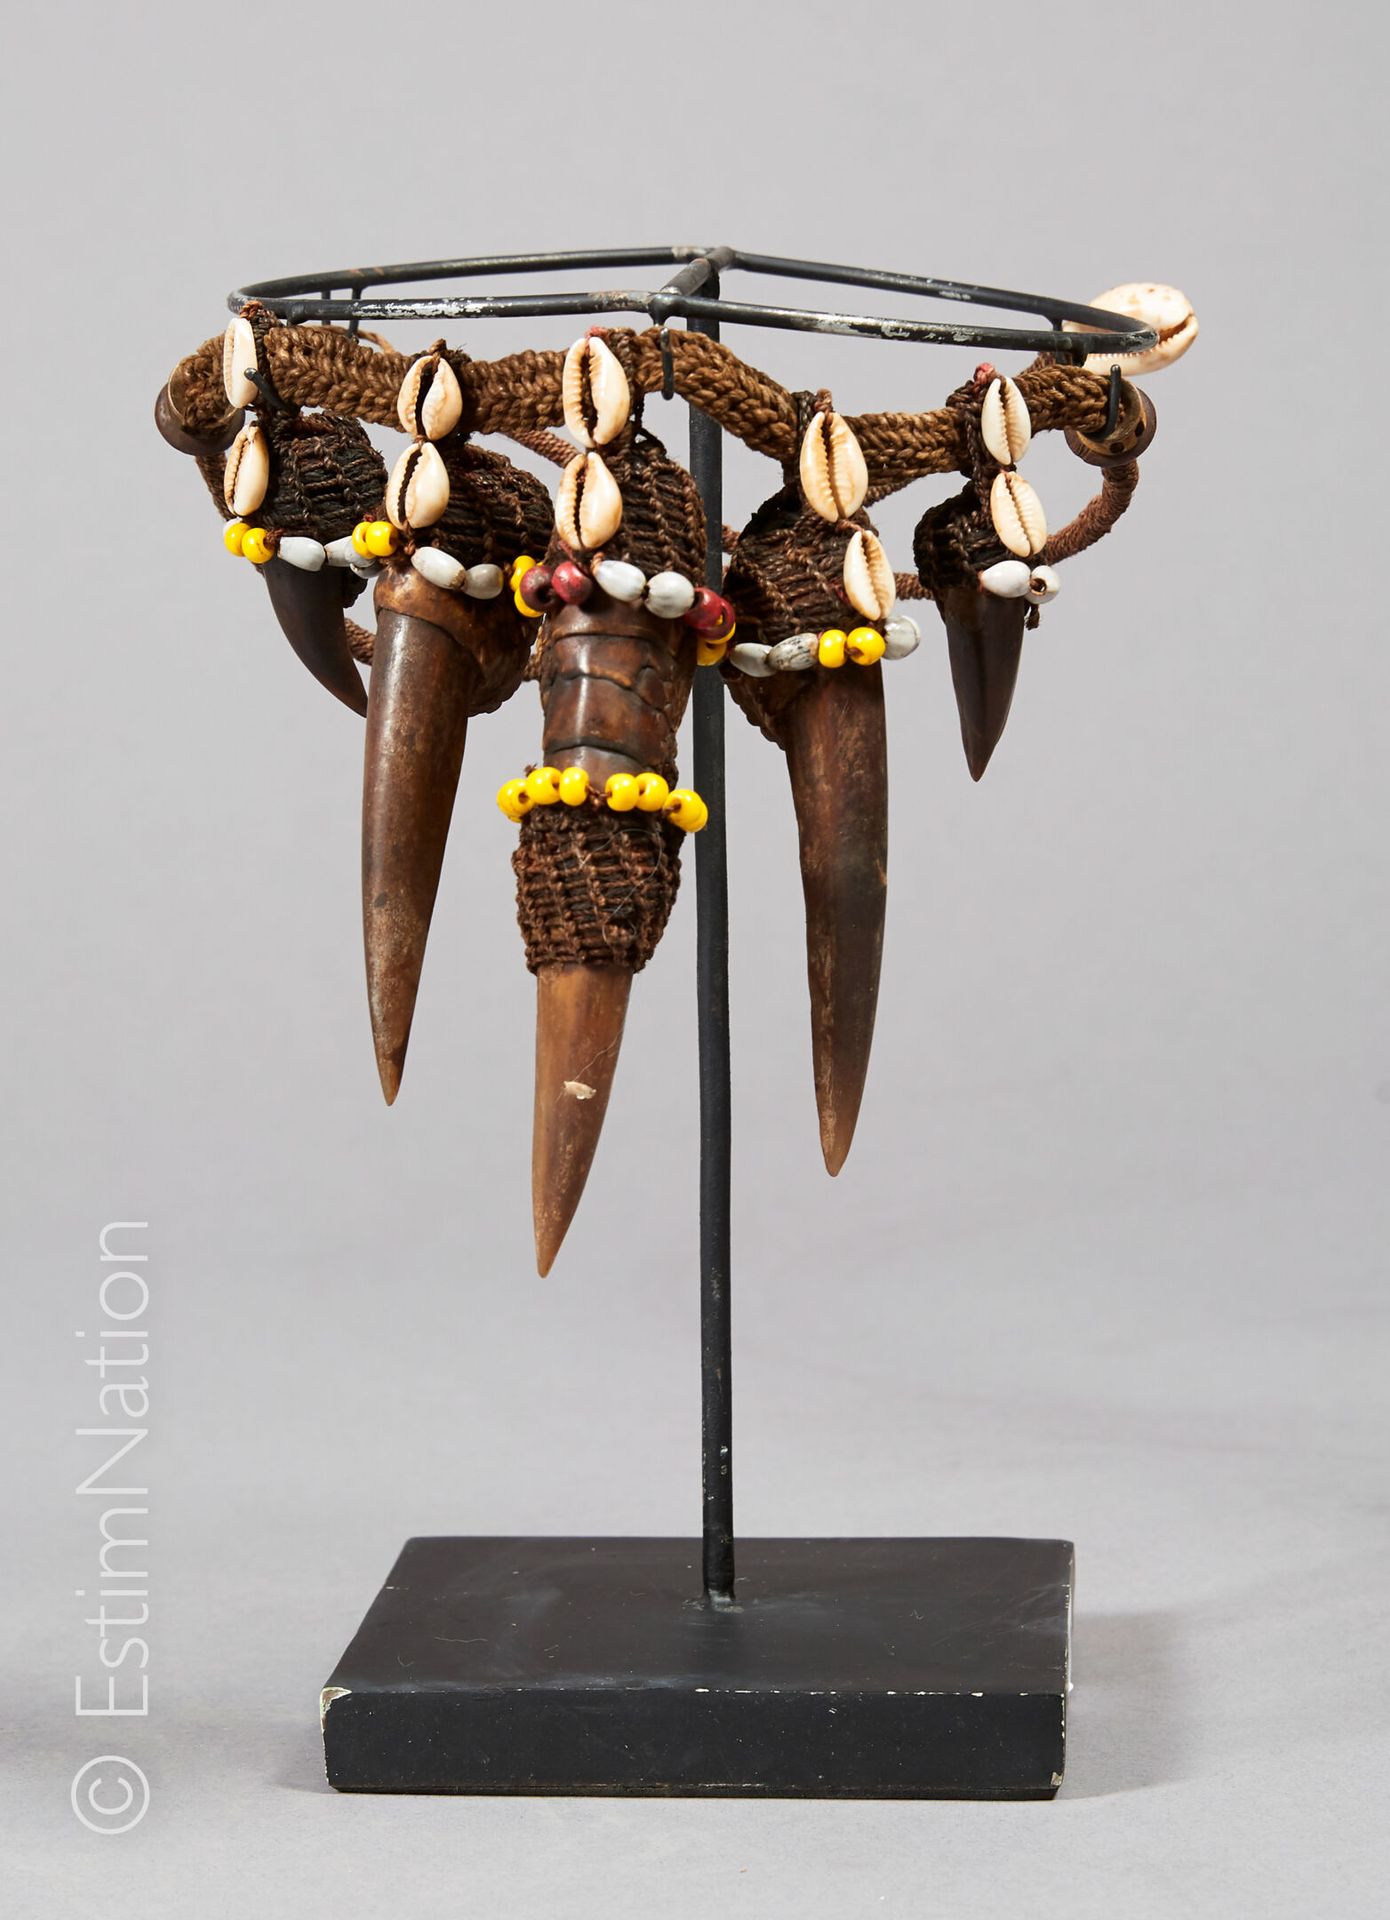 PAPOUASIE - NOUVELLE GUINEE 巴布亚 - 新几内亚



用植物材料编织而成的项链，上面装饰着五只沙袋鼠的爪子，用五色珠子和咖啡豆壳装&hellip;